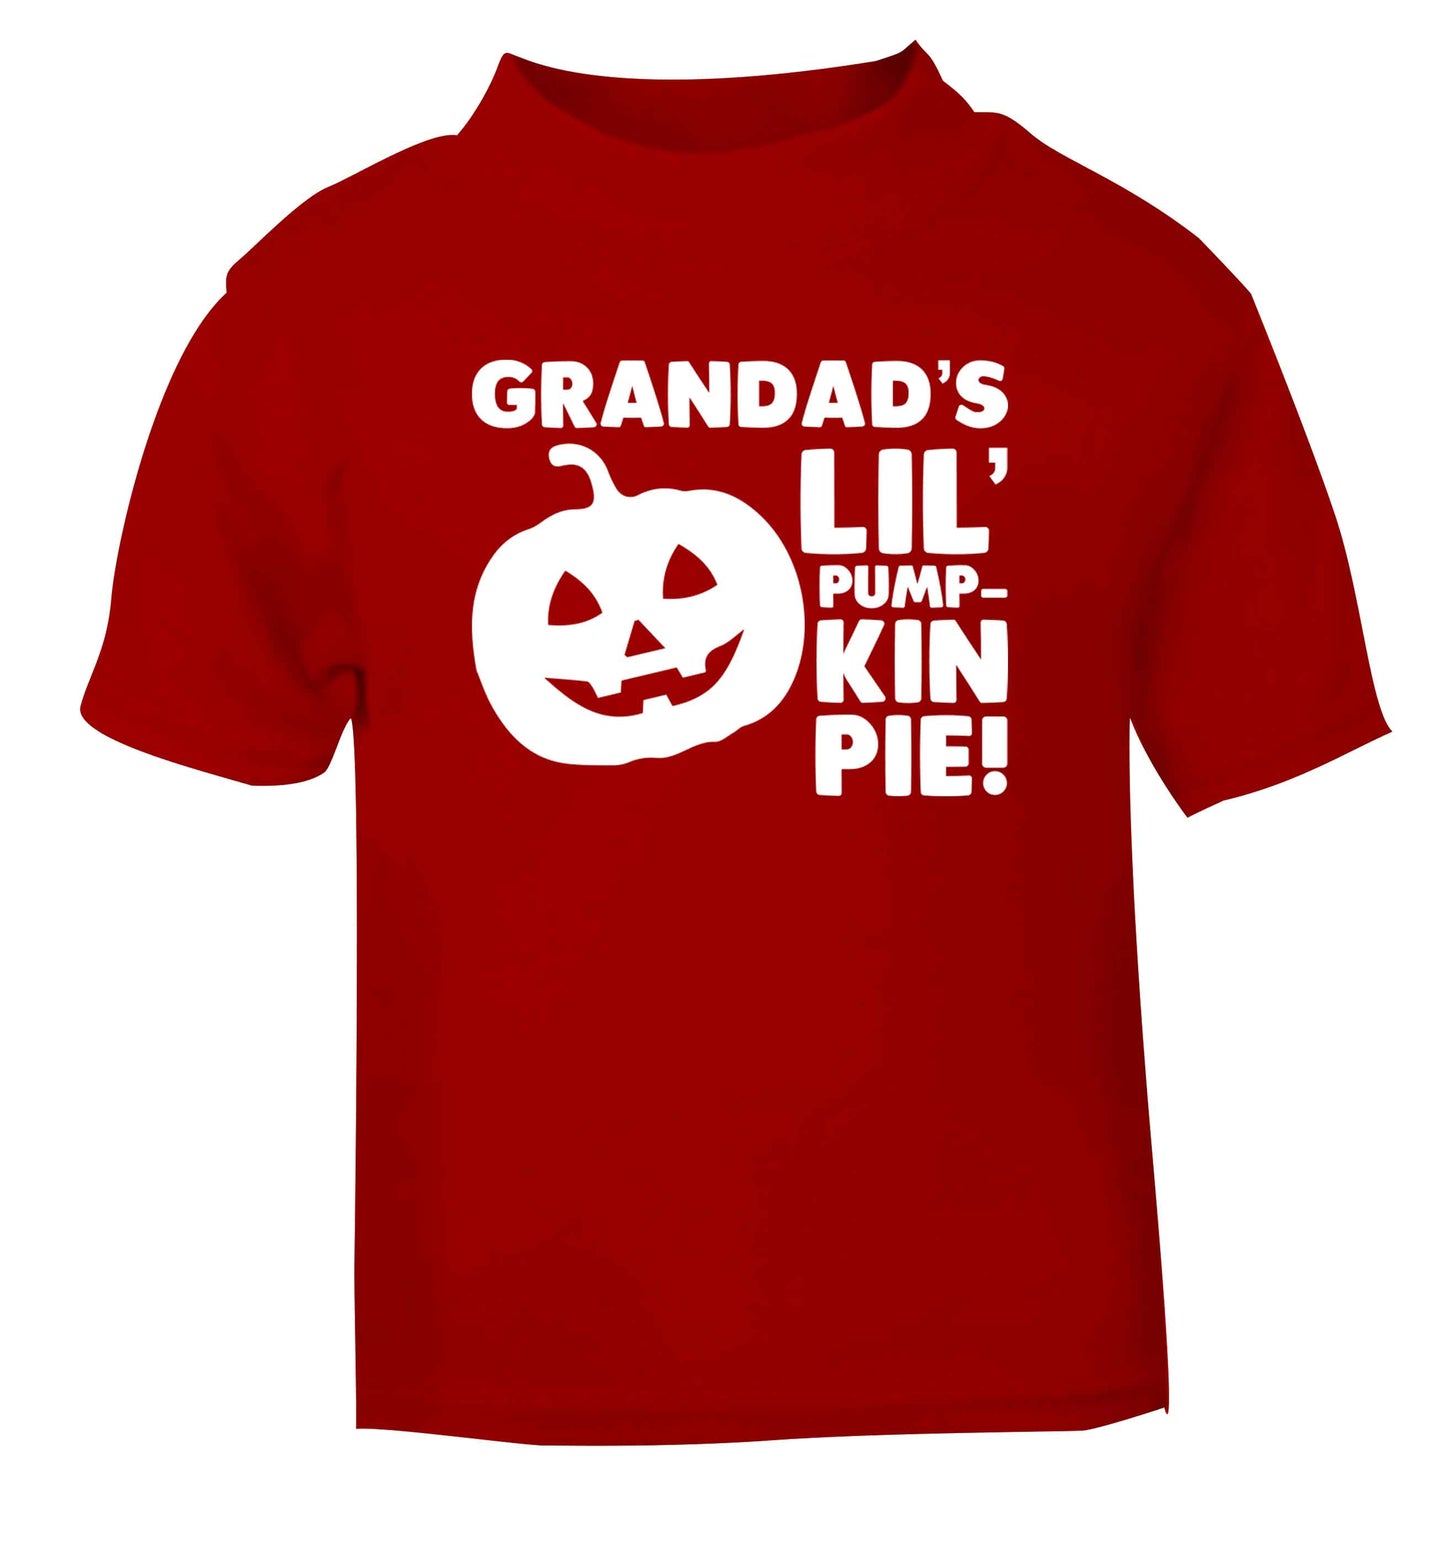 Daddy's lil' pumpkin pie red baby toddler Tshirt 2 Years